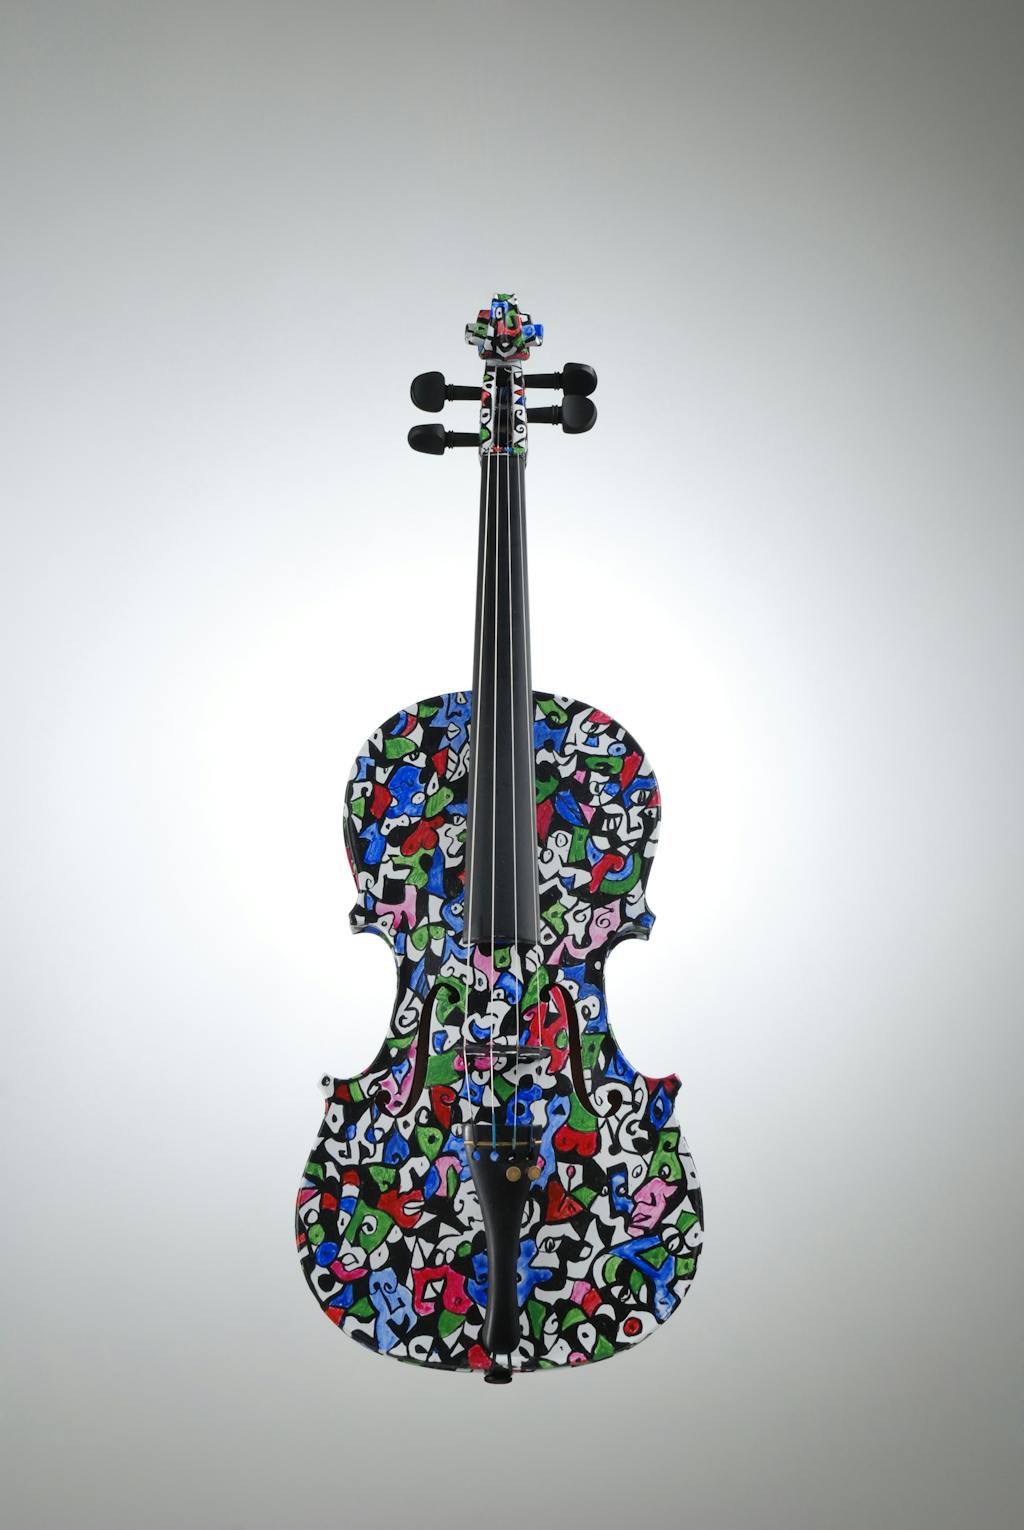 Violin "Spring", painted by Elena Birkenwald in 2007